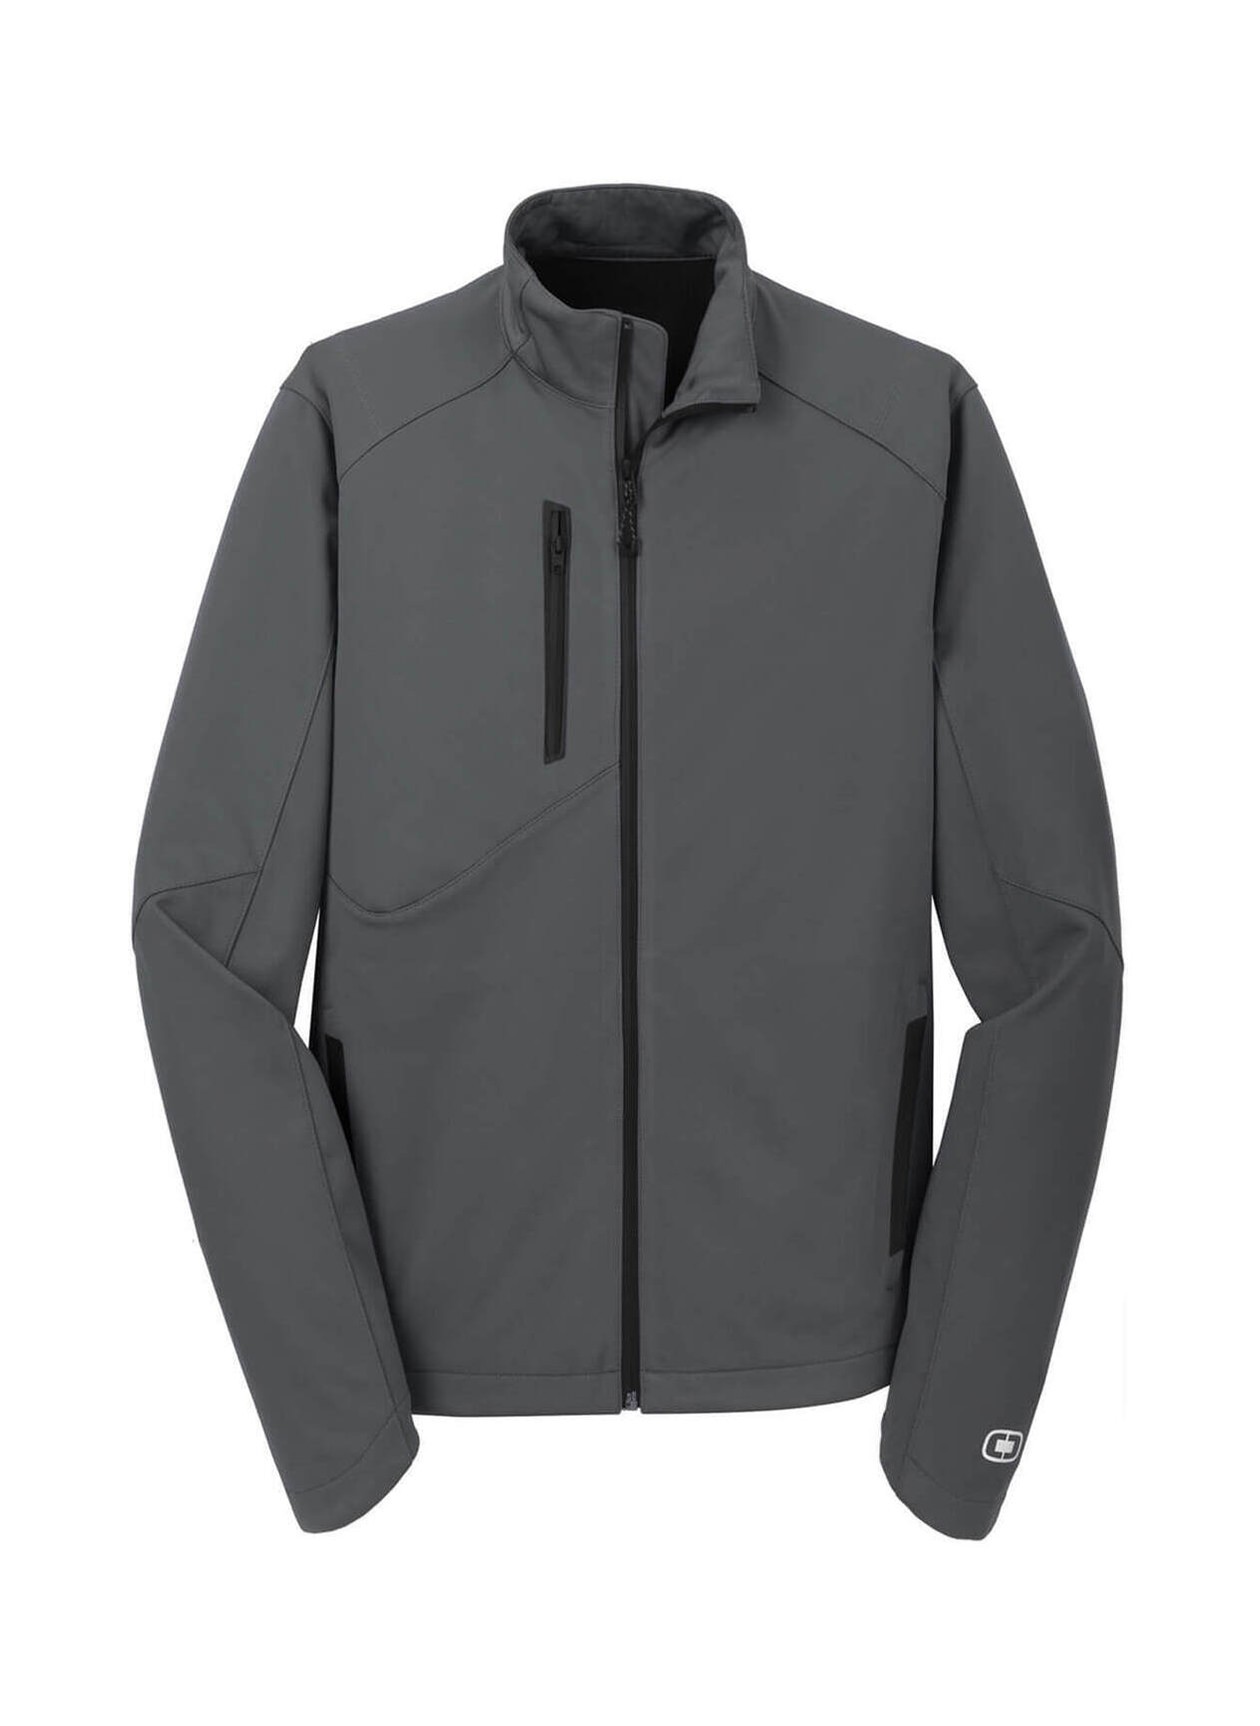 OGIO Men's Gear Grey Crux Jacket